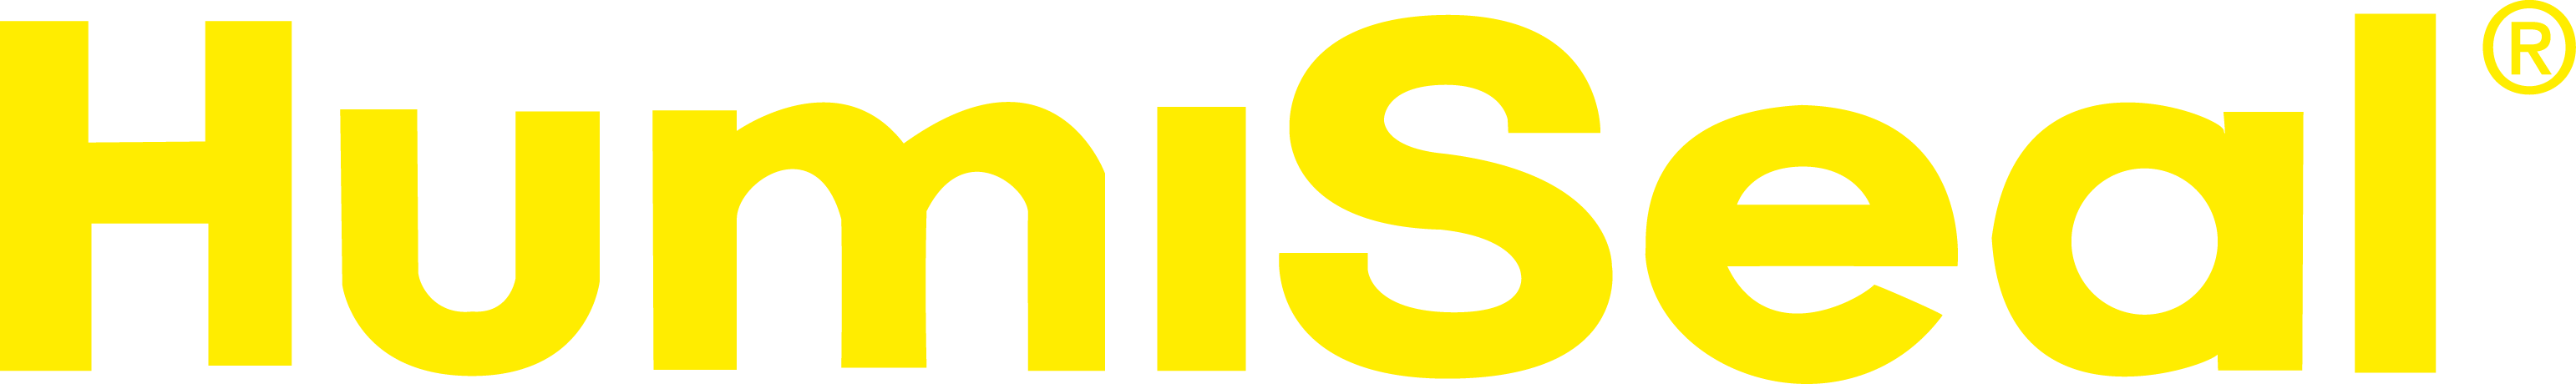 HumiSeal bcard logo-yellow